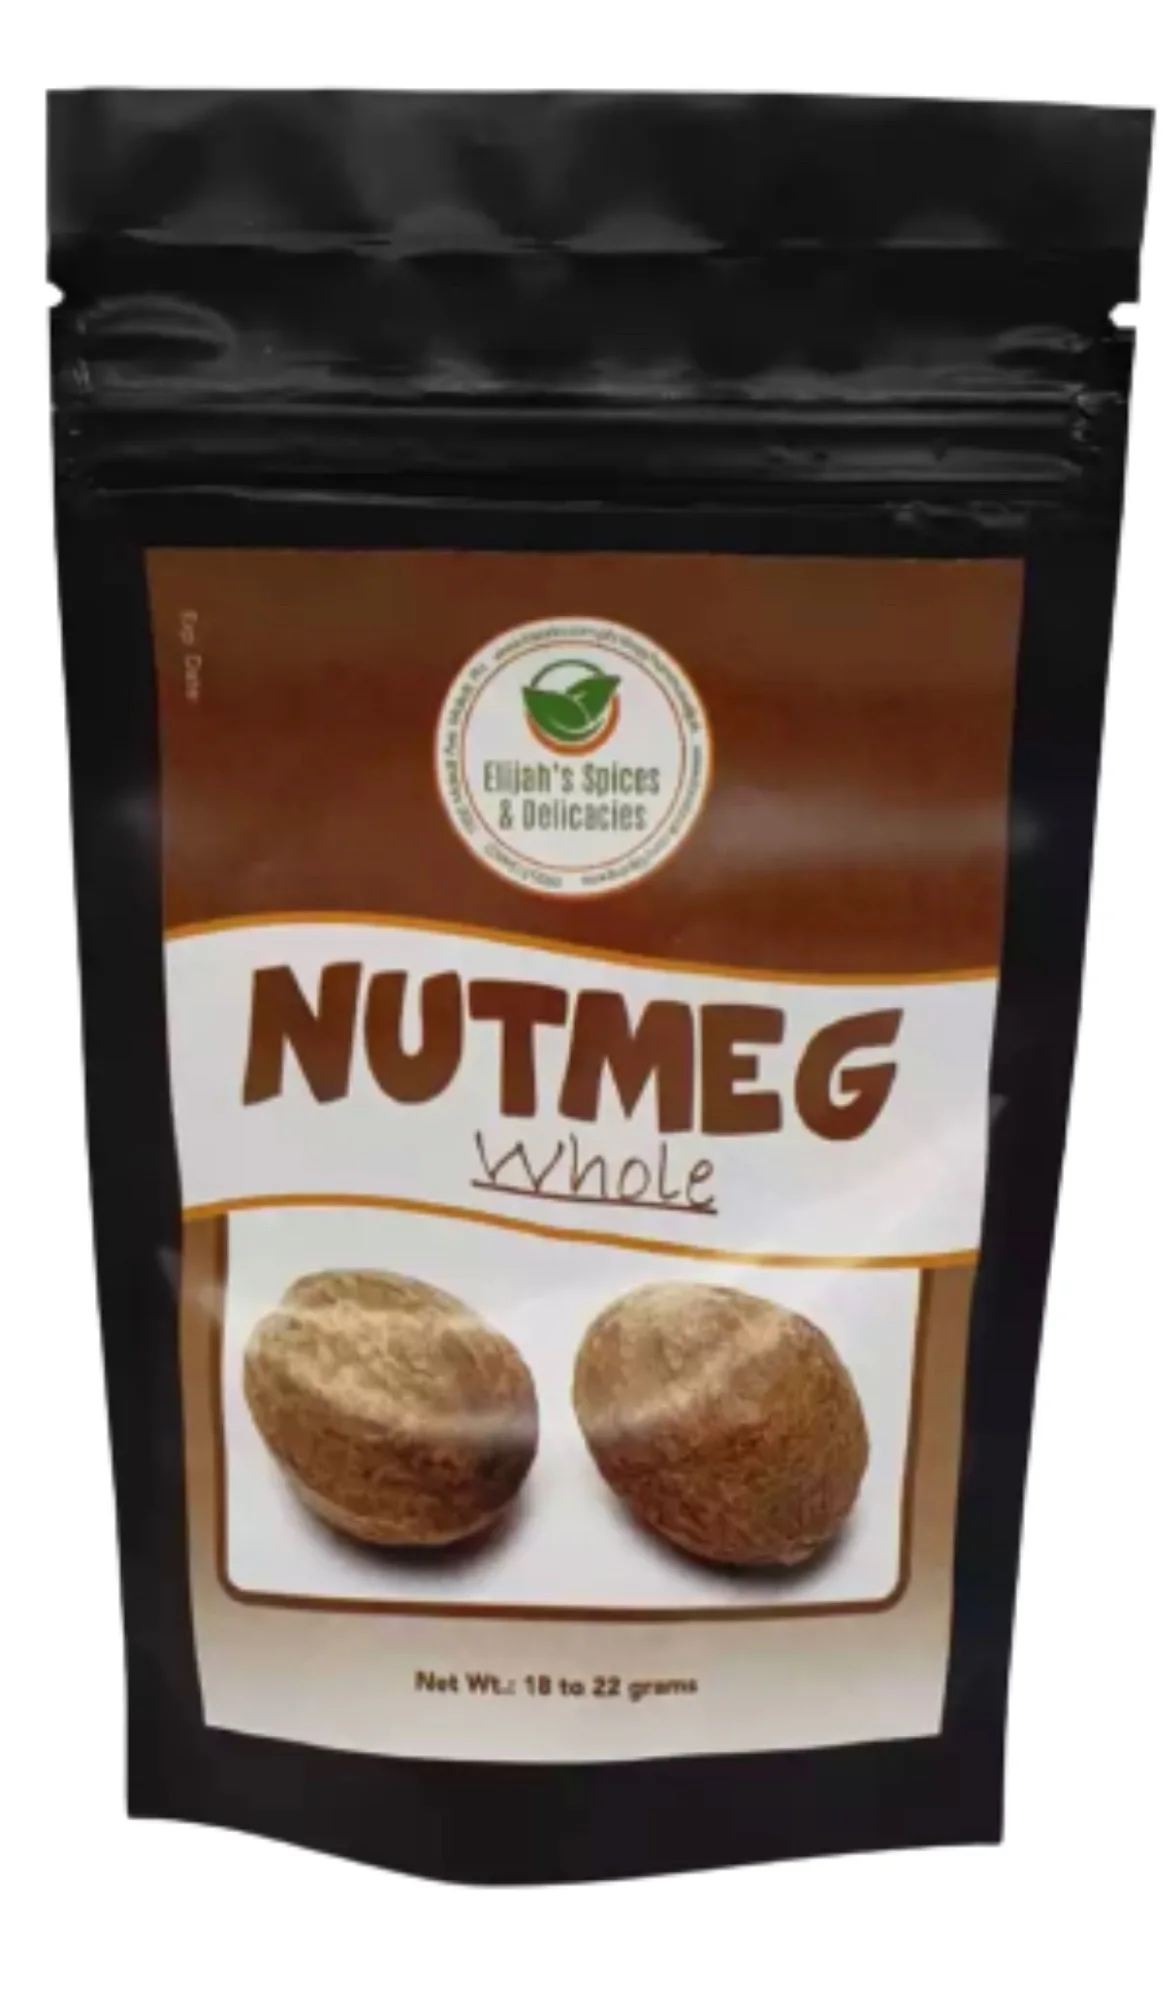 Nutmeg (whole) 20 gr (2 pieces)